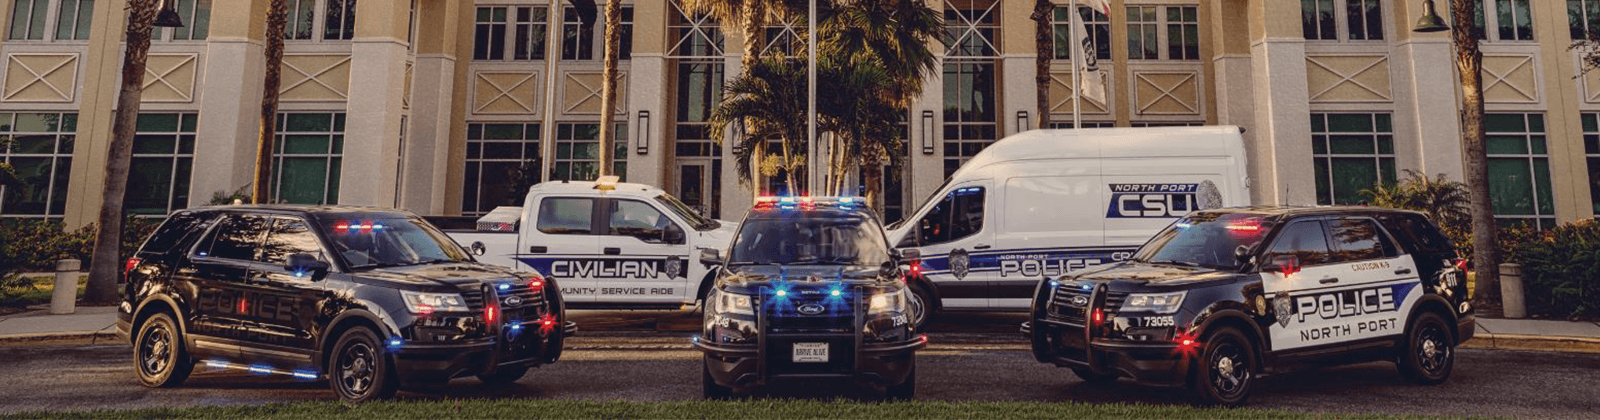 Police - North Port, FL